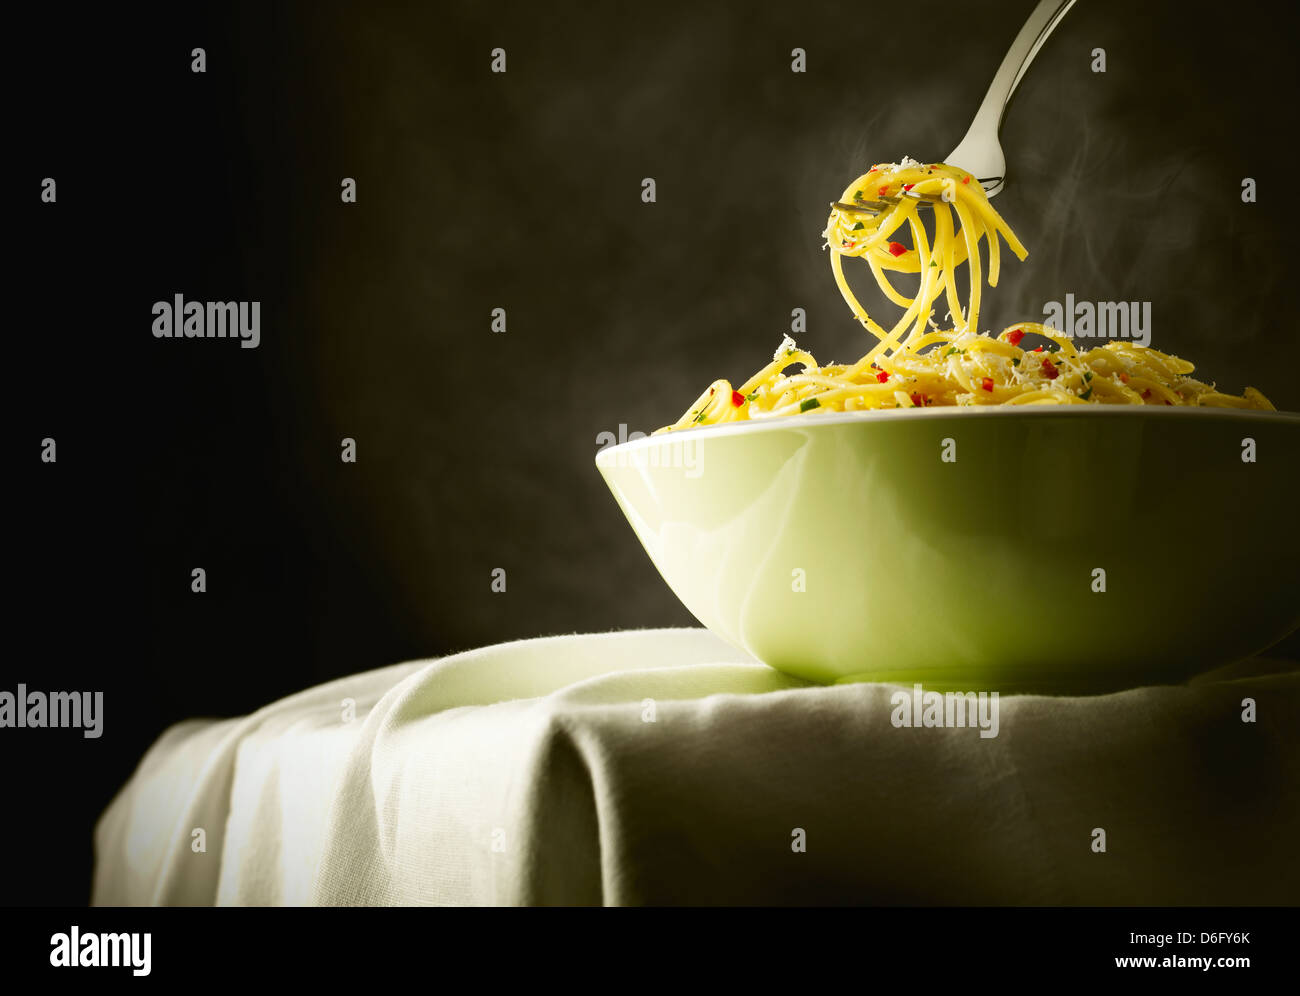 Espaguetis con chili Foto de stock